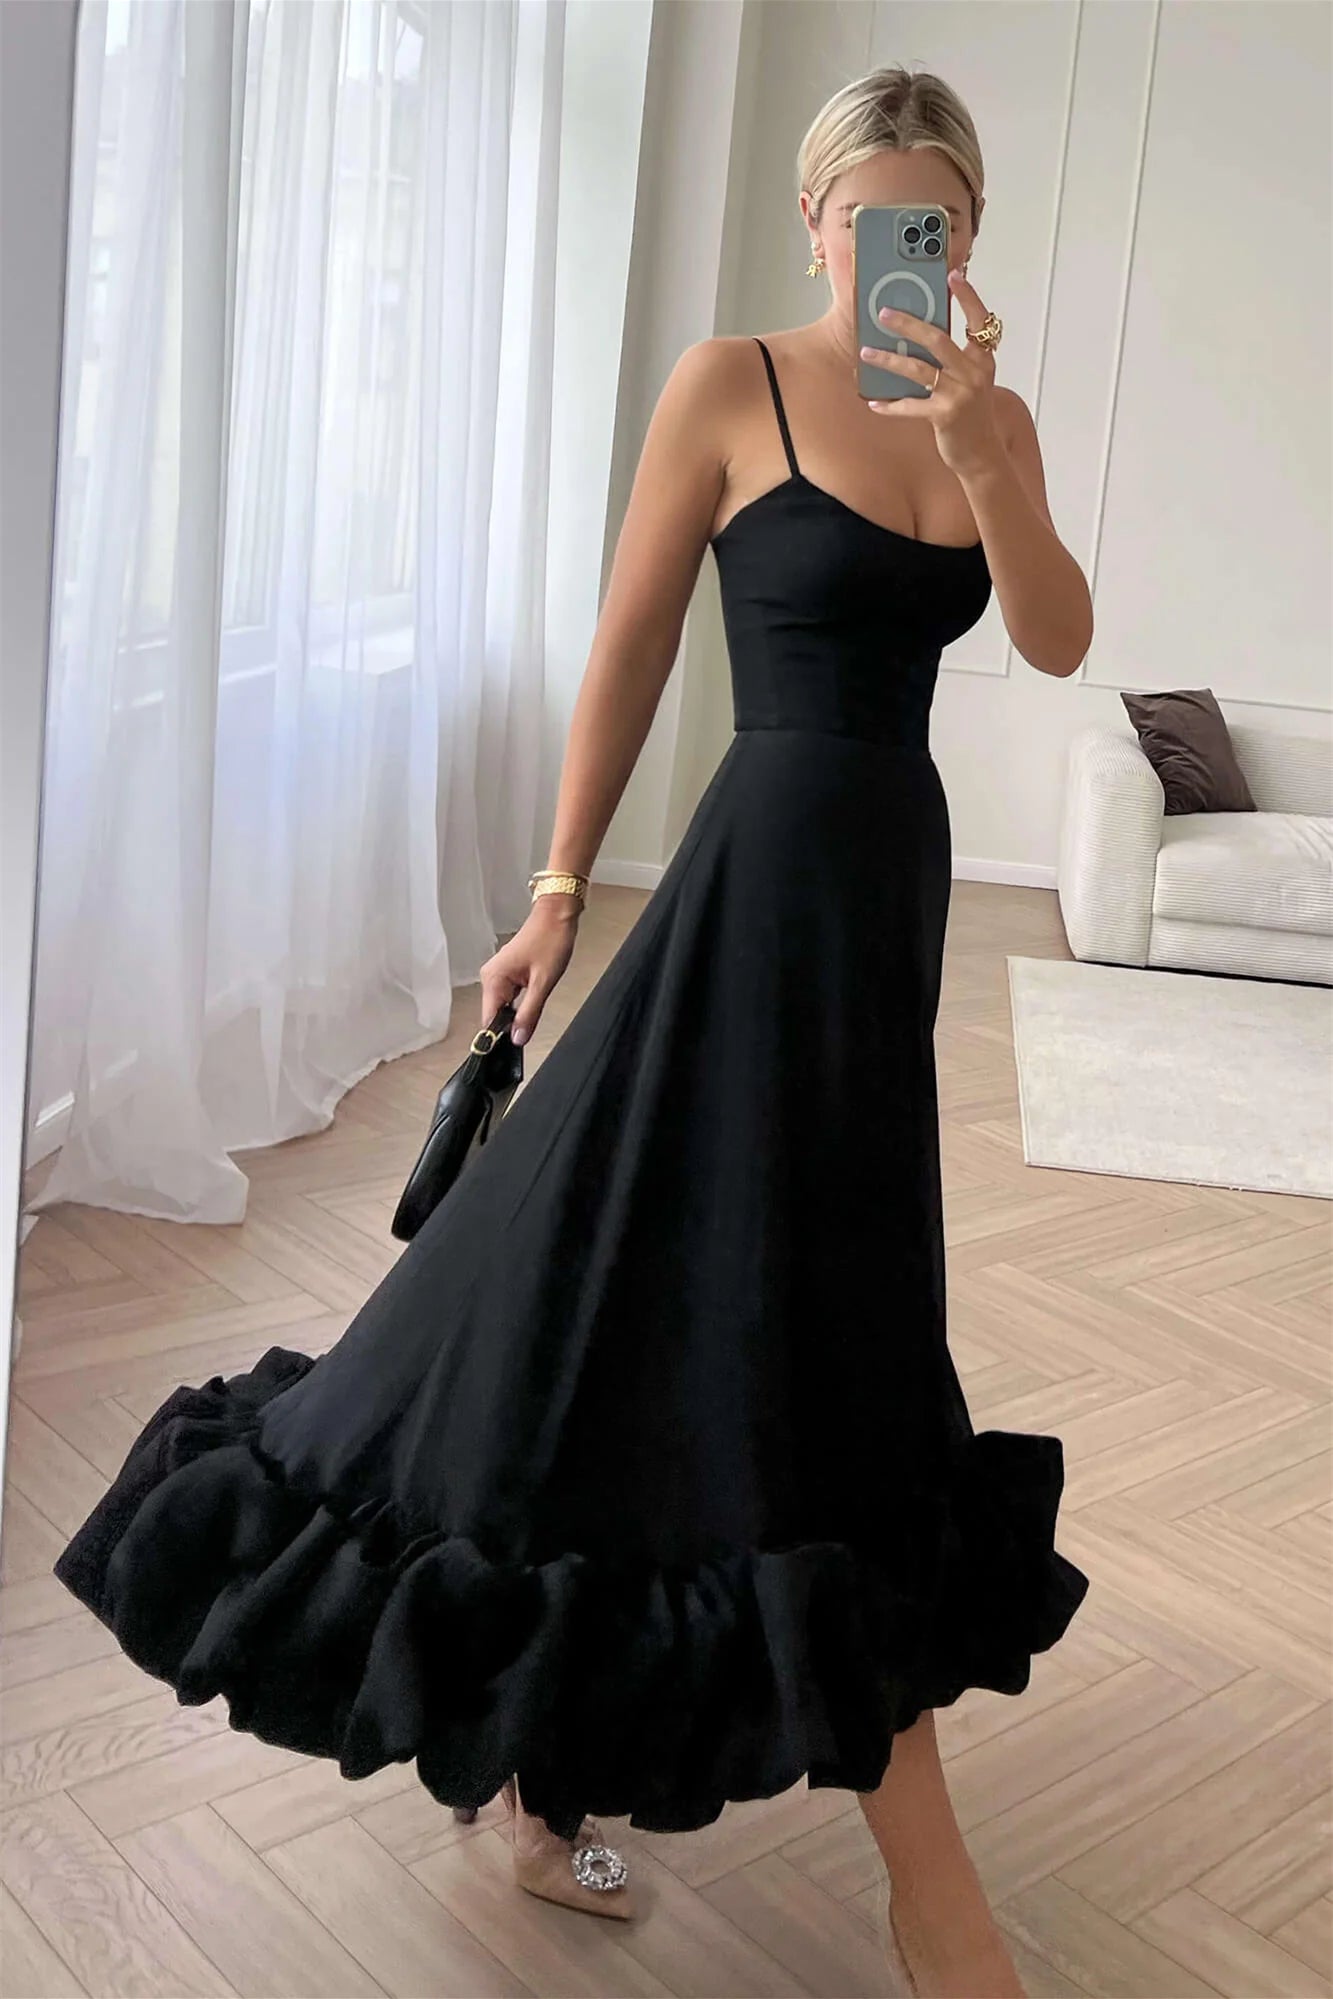 Scoop Neckline Black Midi Dresses, Unique Ruffles Skirt, Simple Black Dresses, Newest Prom Dresses, Wedding Guest Dresses, Bridesmaid Dresses